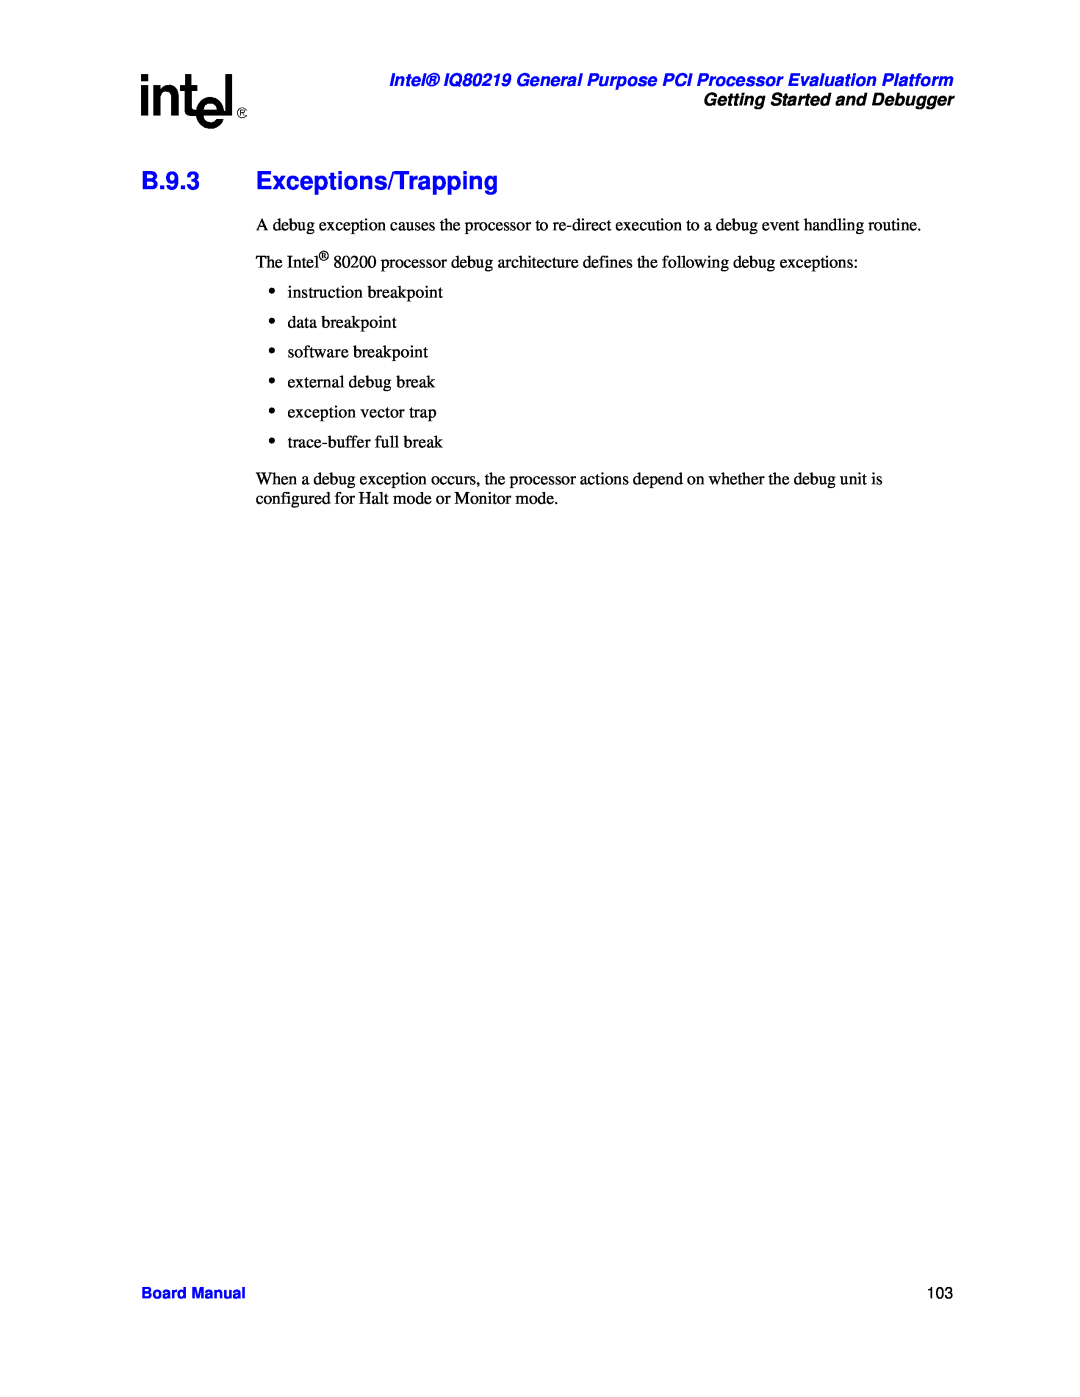 Intel manual B.9.3 Exceptions/Trapping, Intel IQ80219 General Purpose PCI Processor Evaluation Platform 